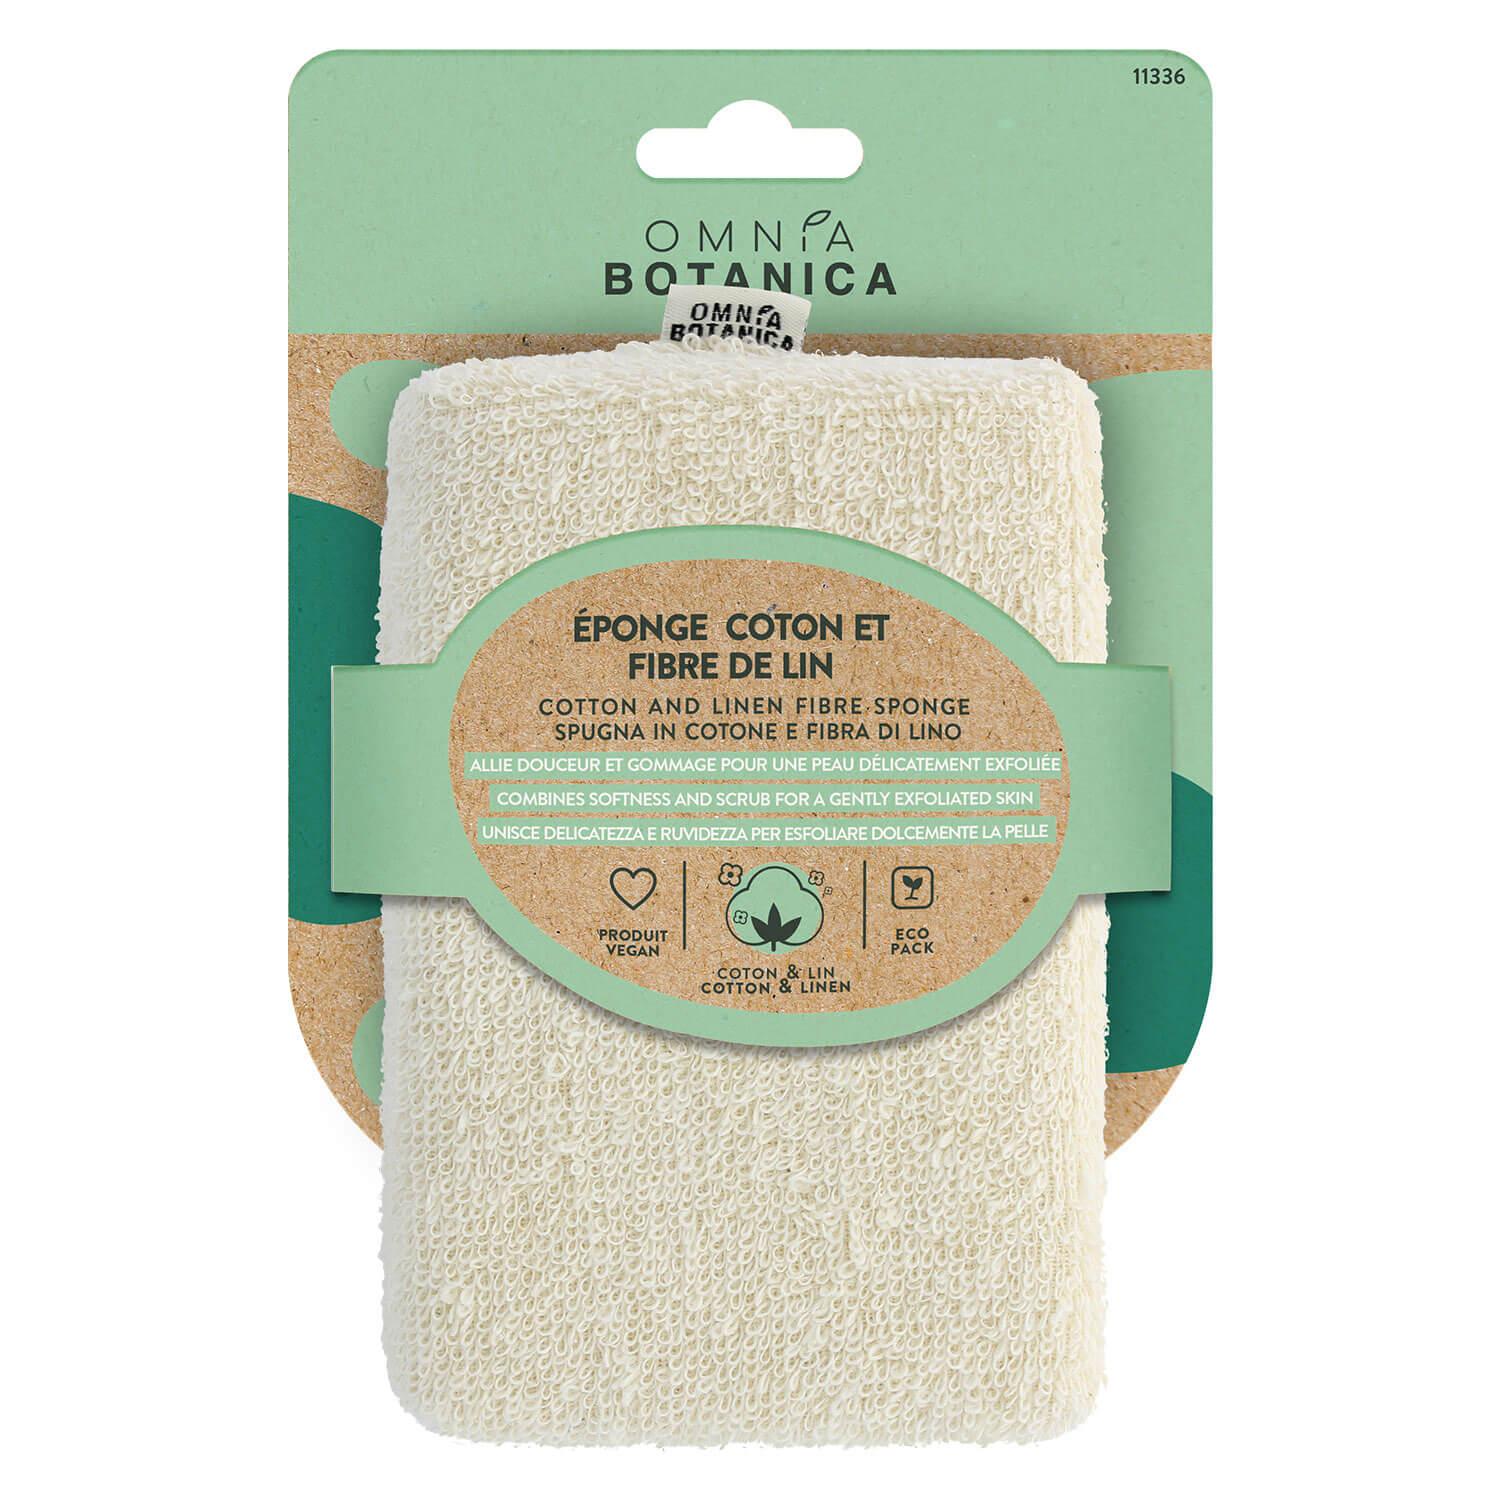 OMNIA BOTANICA - Cotton and linen sponge